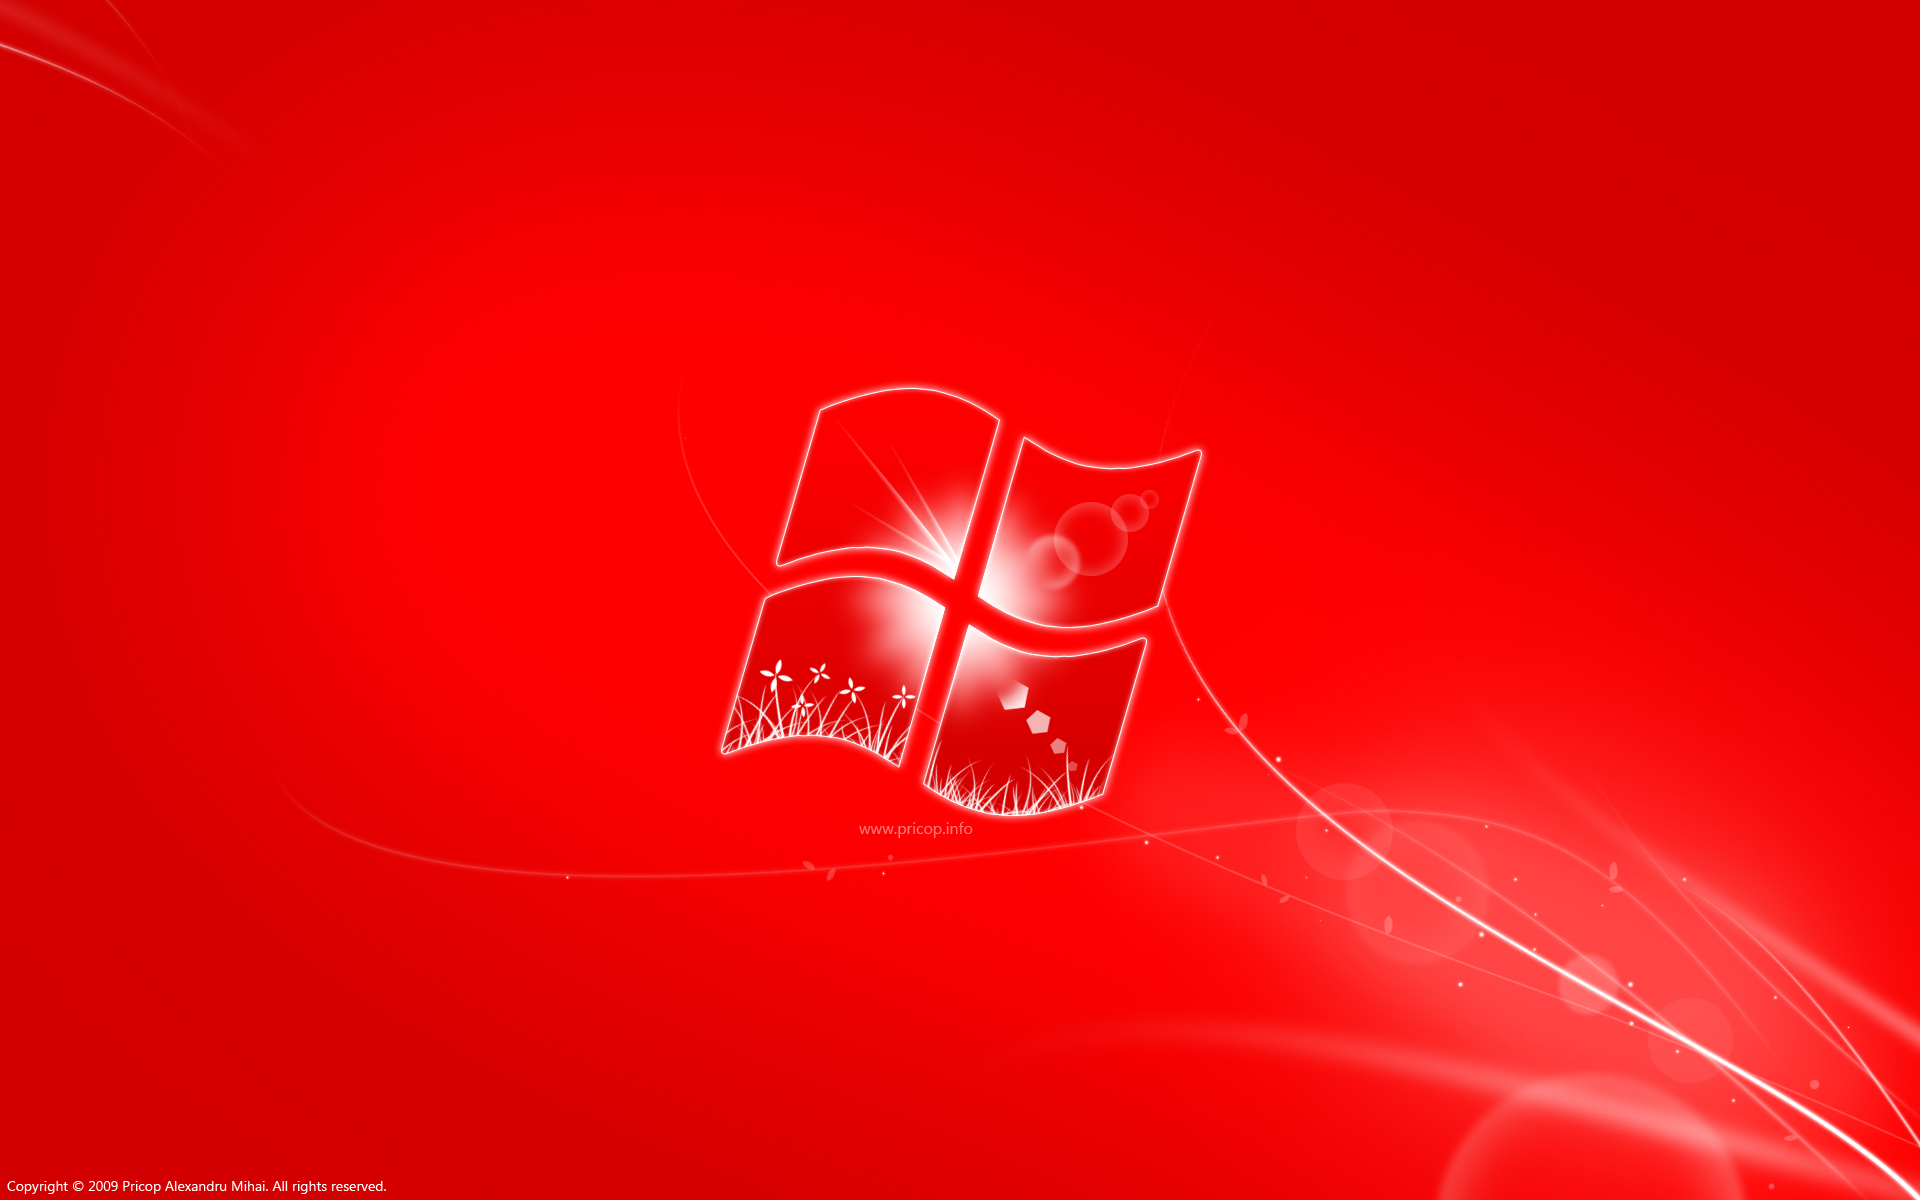 Windows Red By Pricop